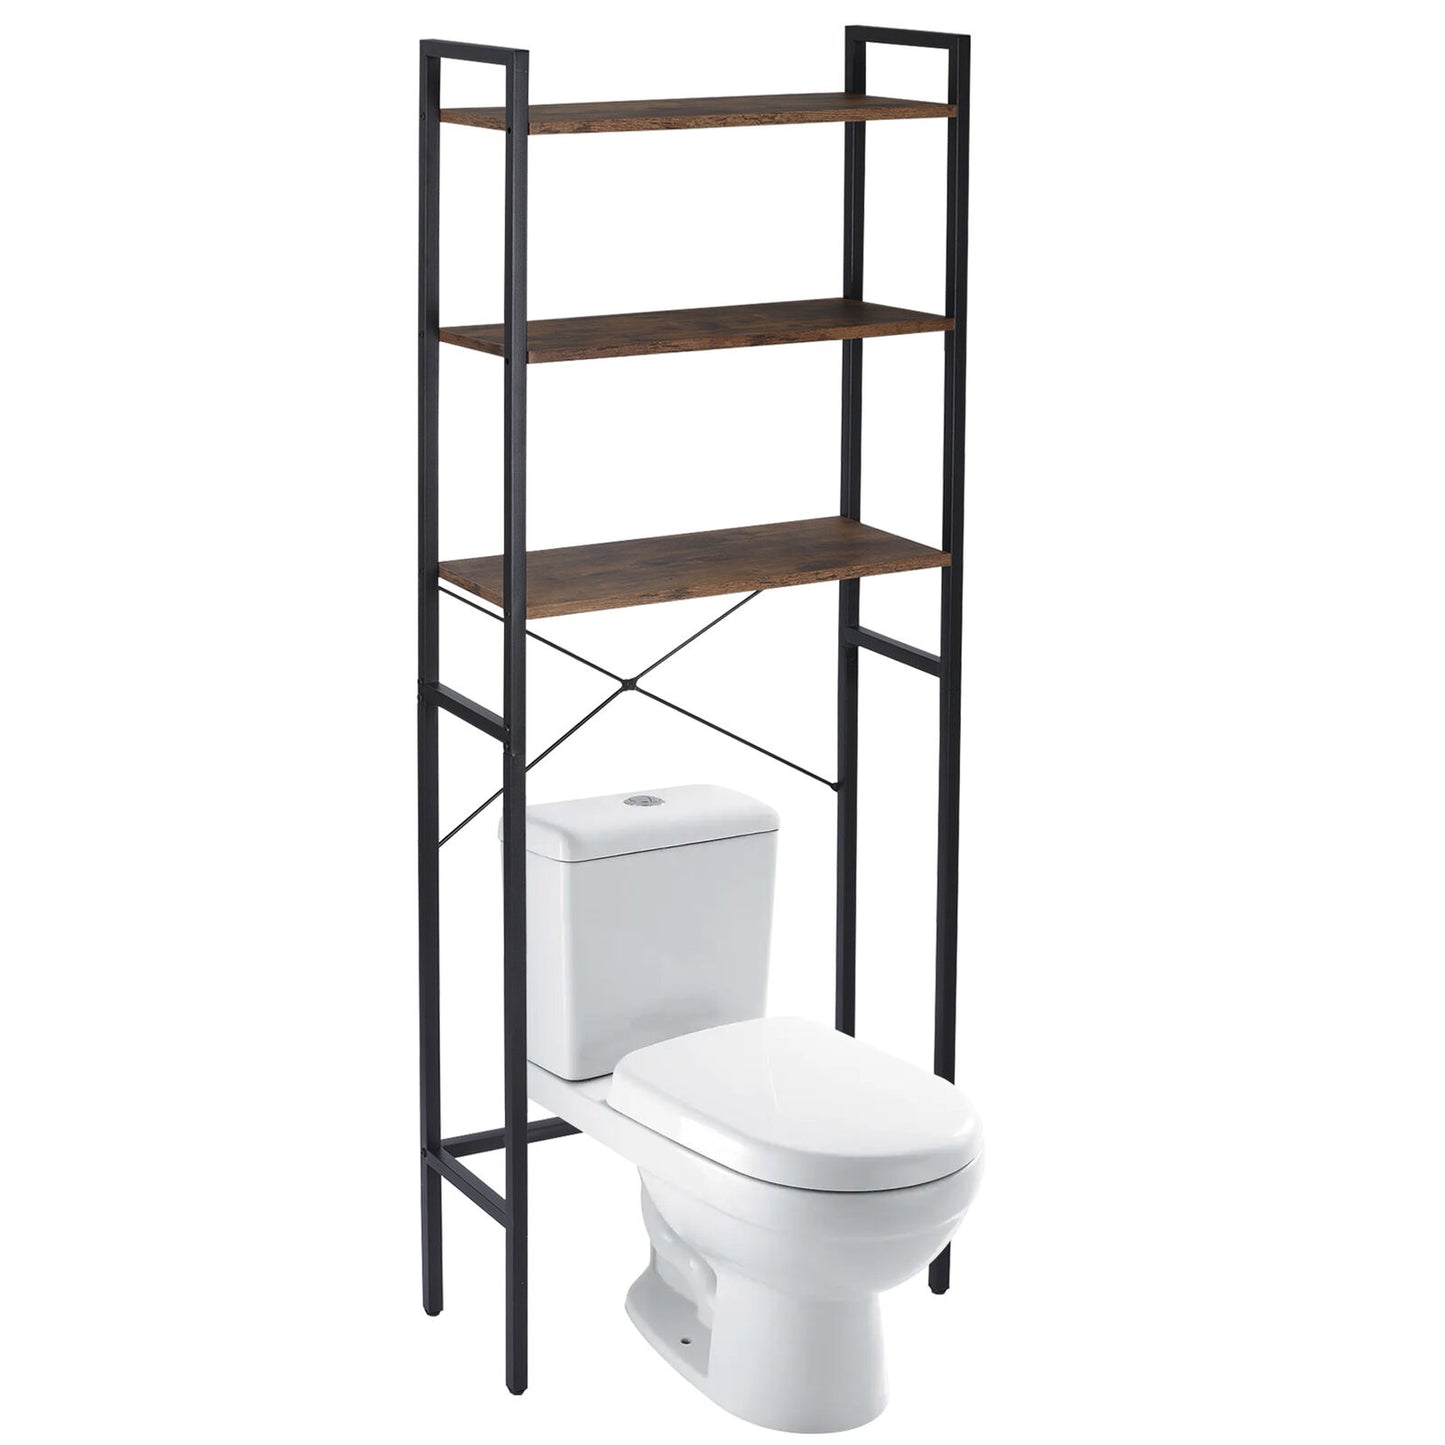 3-Tier Over The Toilet Storage MDF Bathroom Organizer Shelves Brown Freestanding